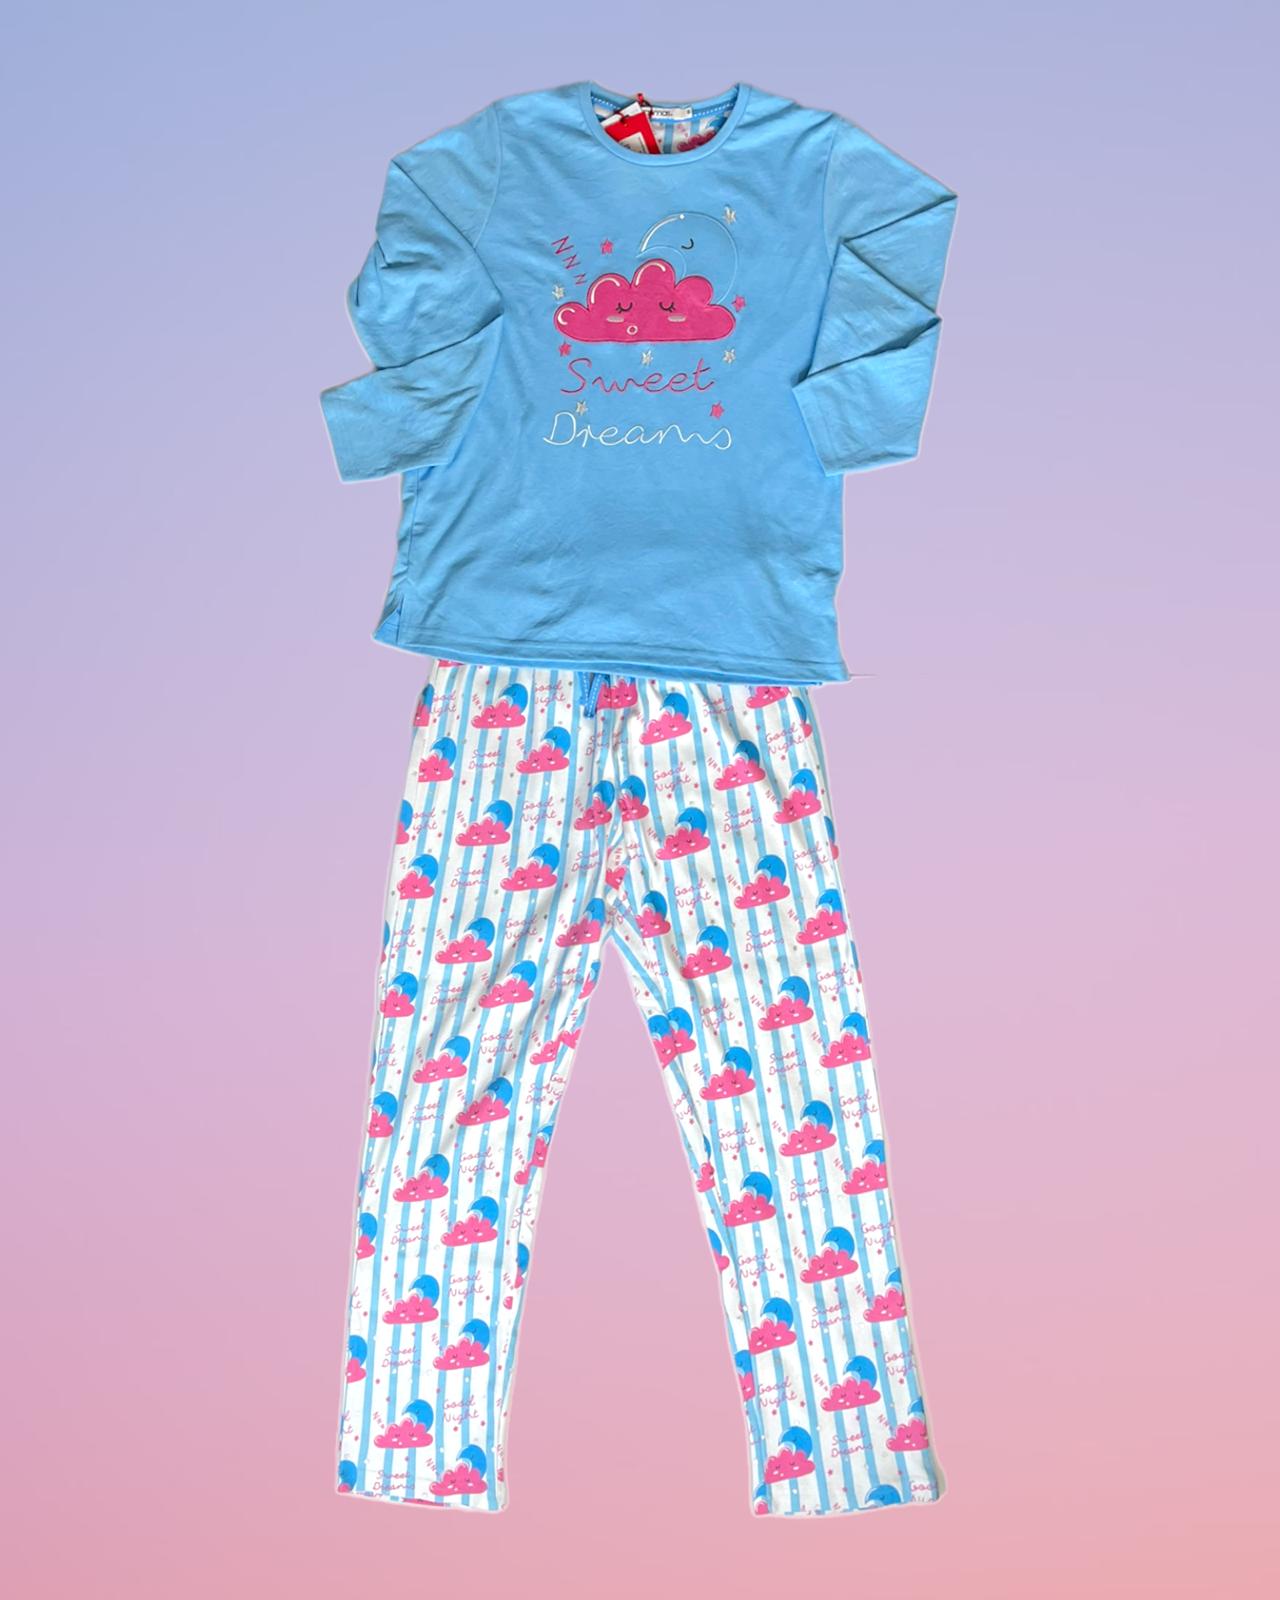 Admas | Women's pajamas light blue and pink cloud sweet dreams